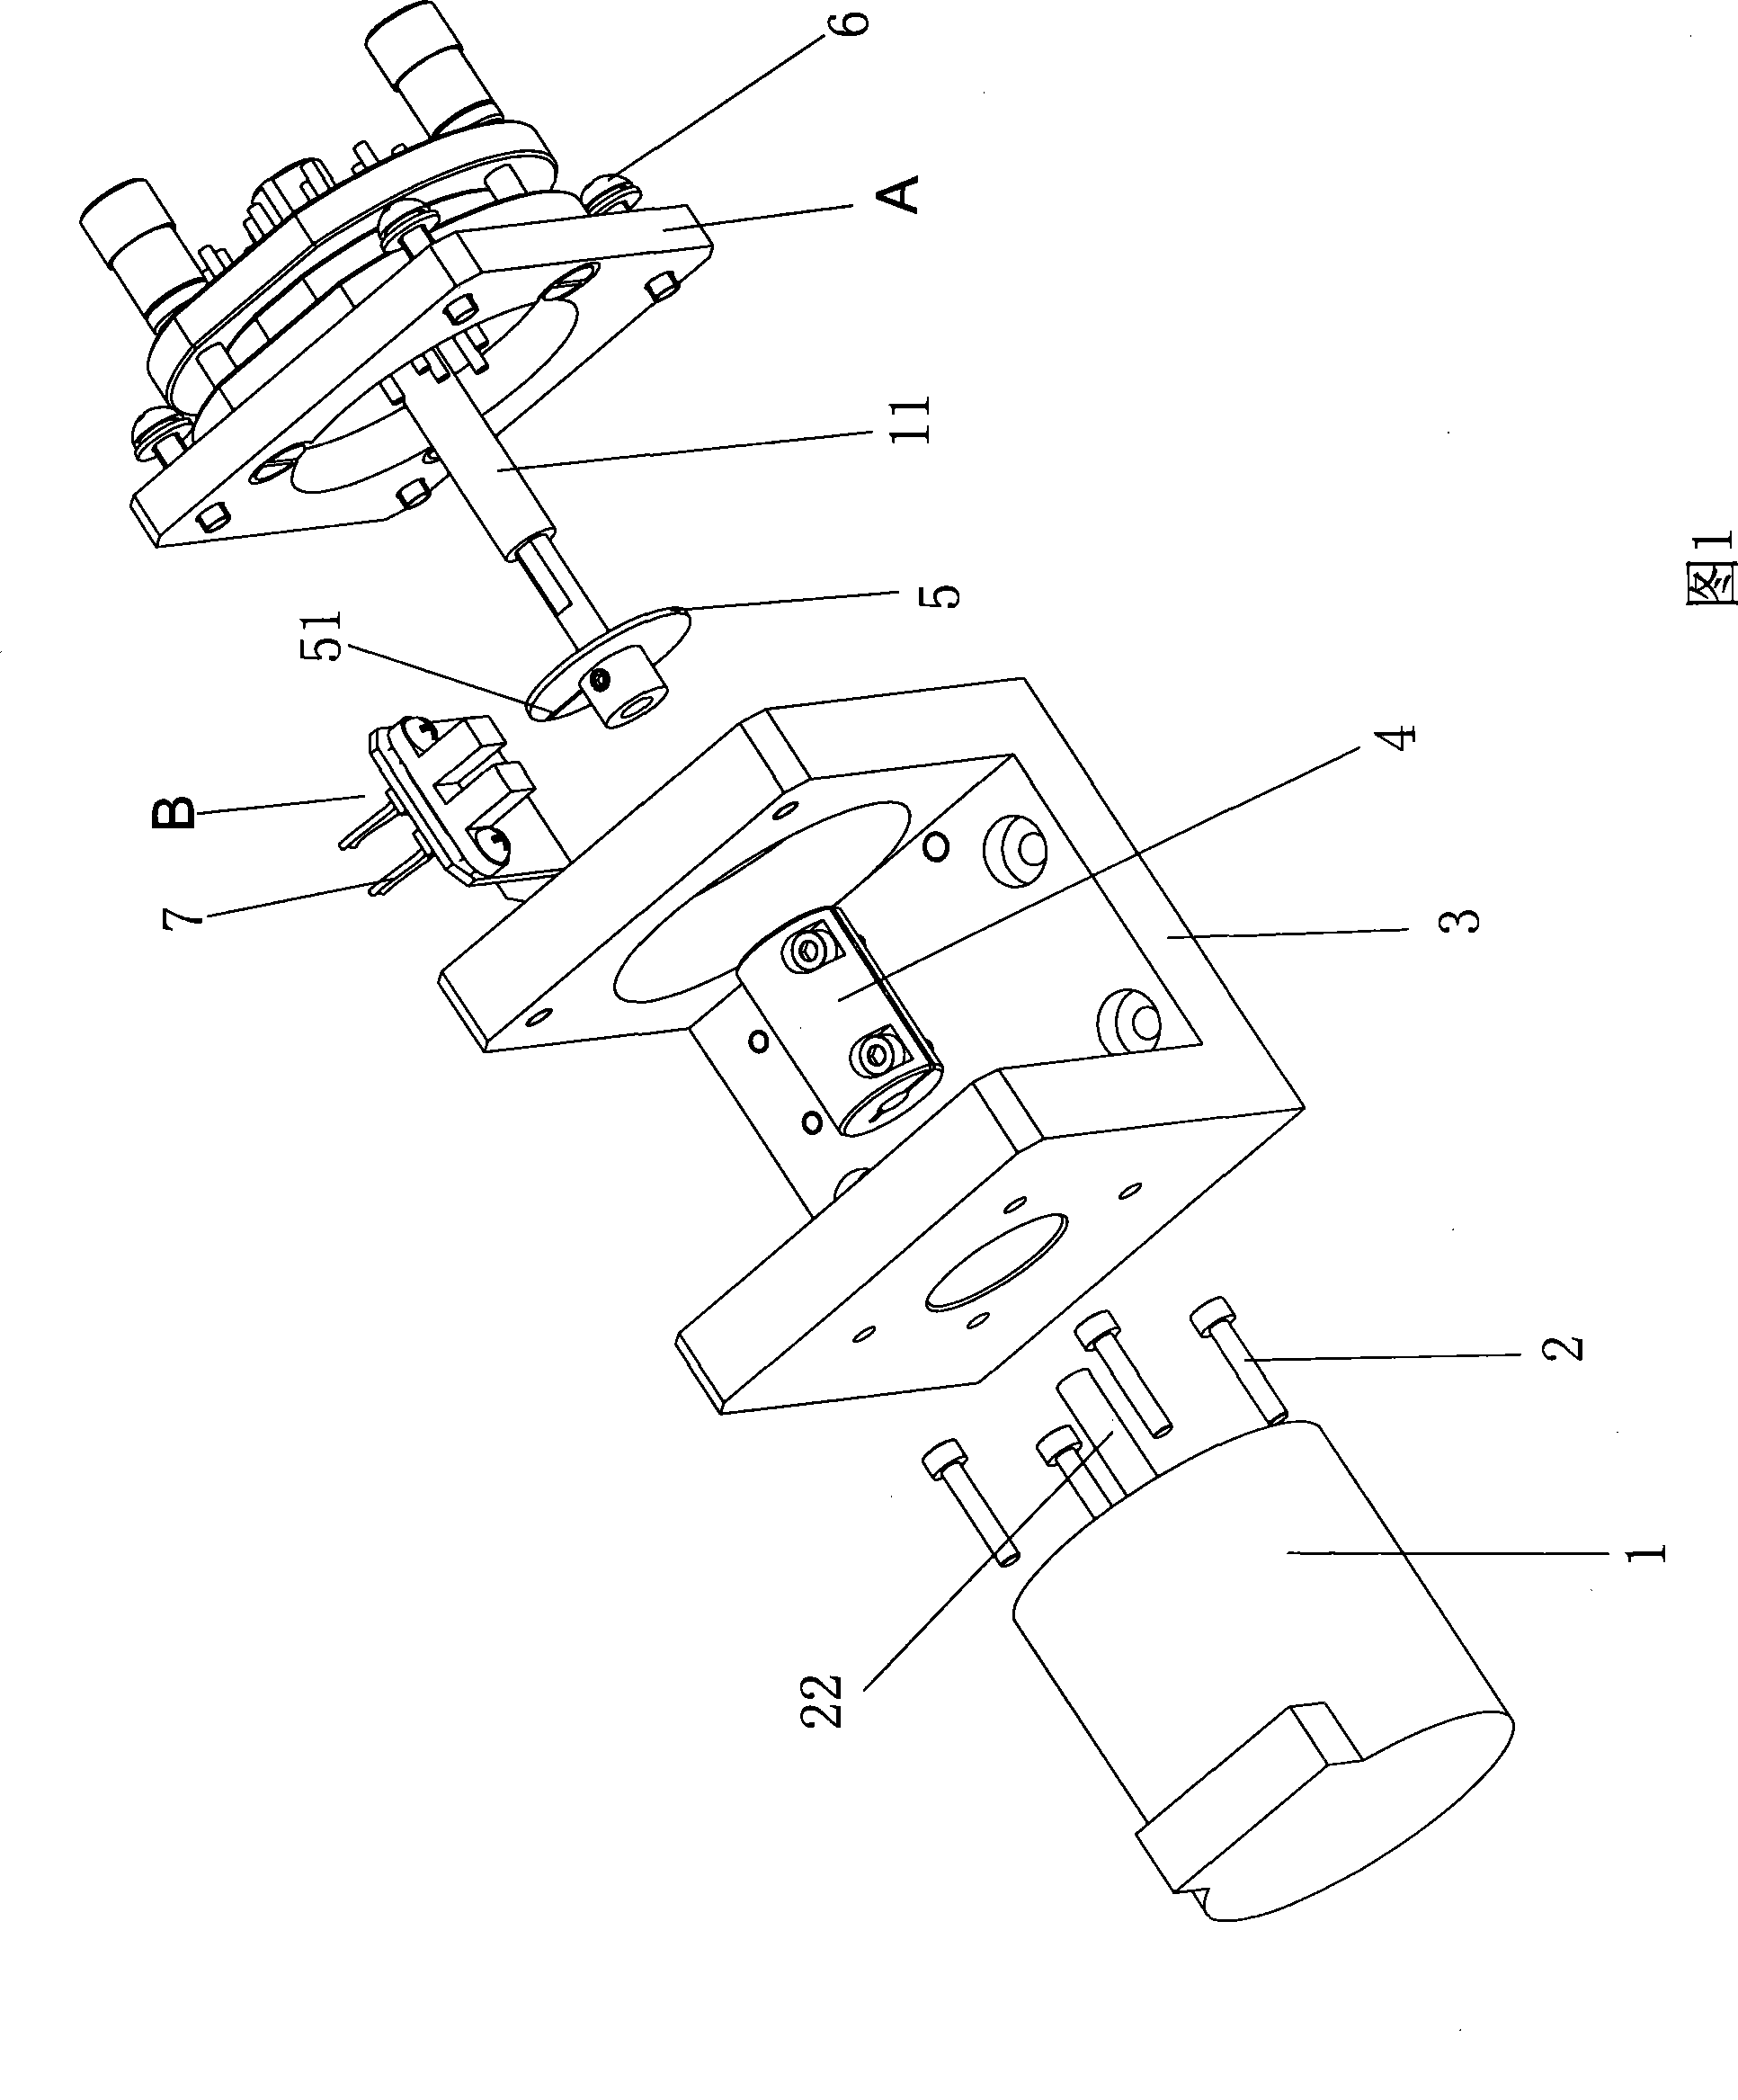 Rotary integrated valve